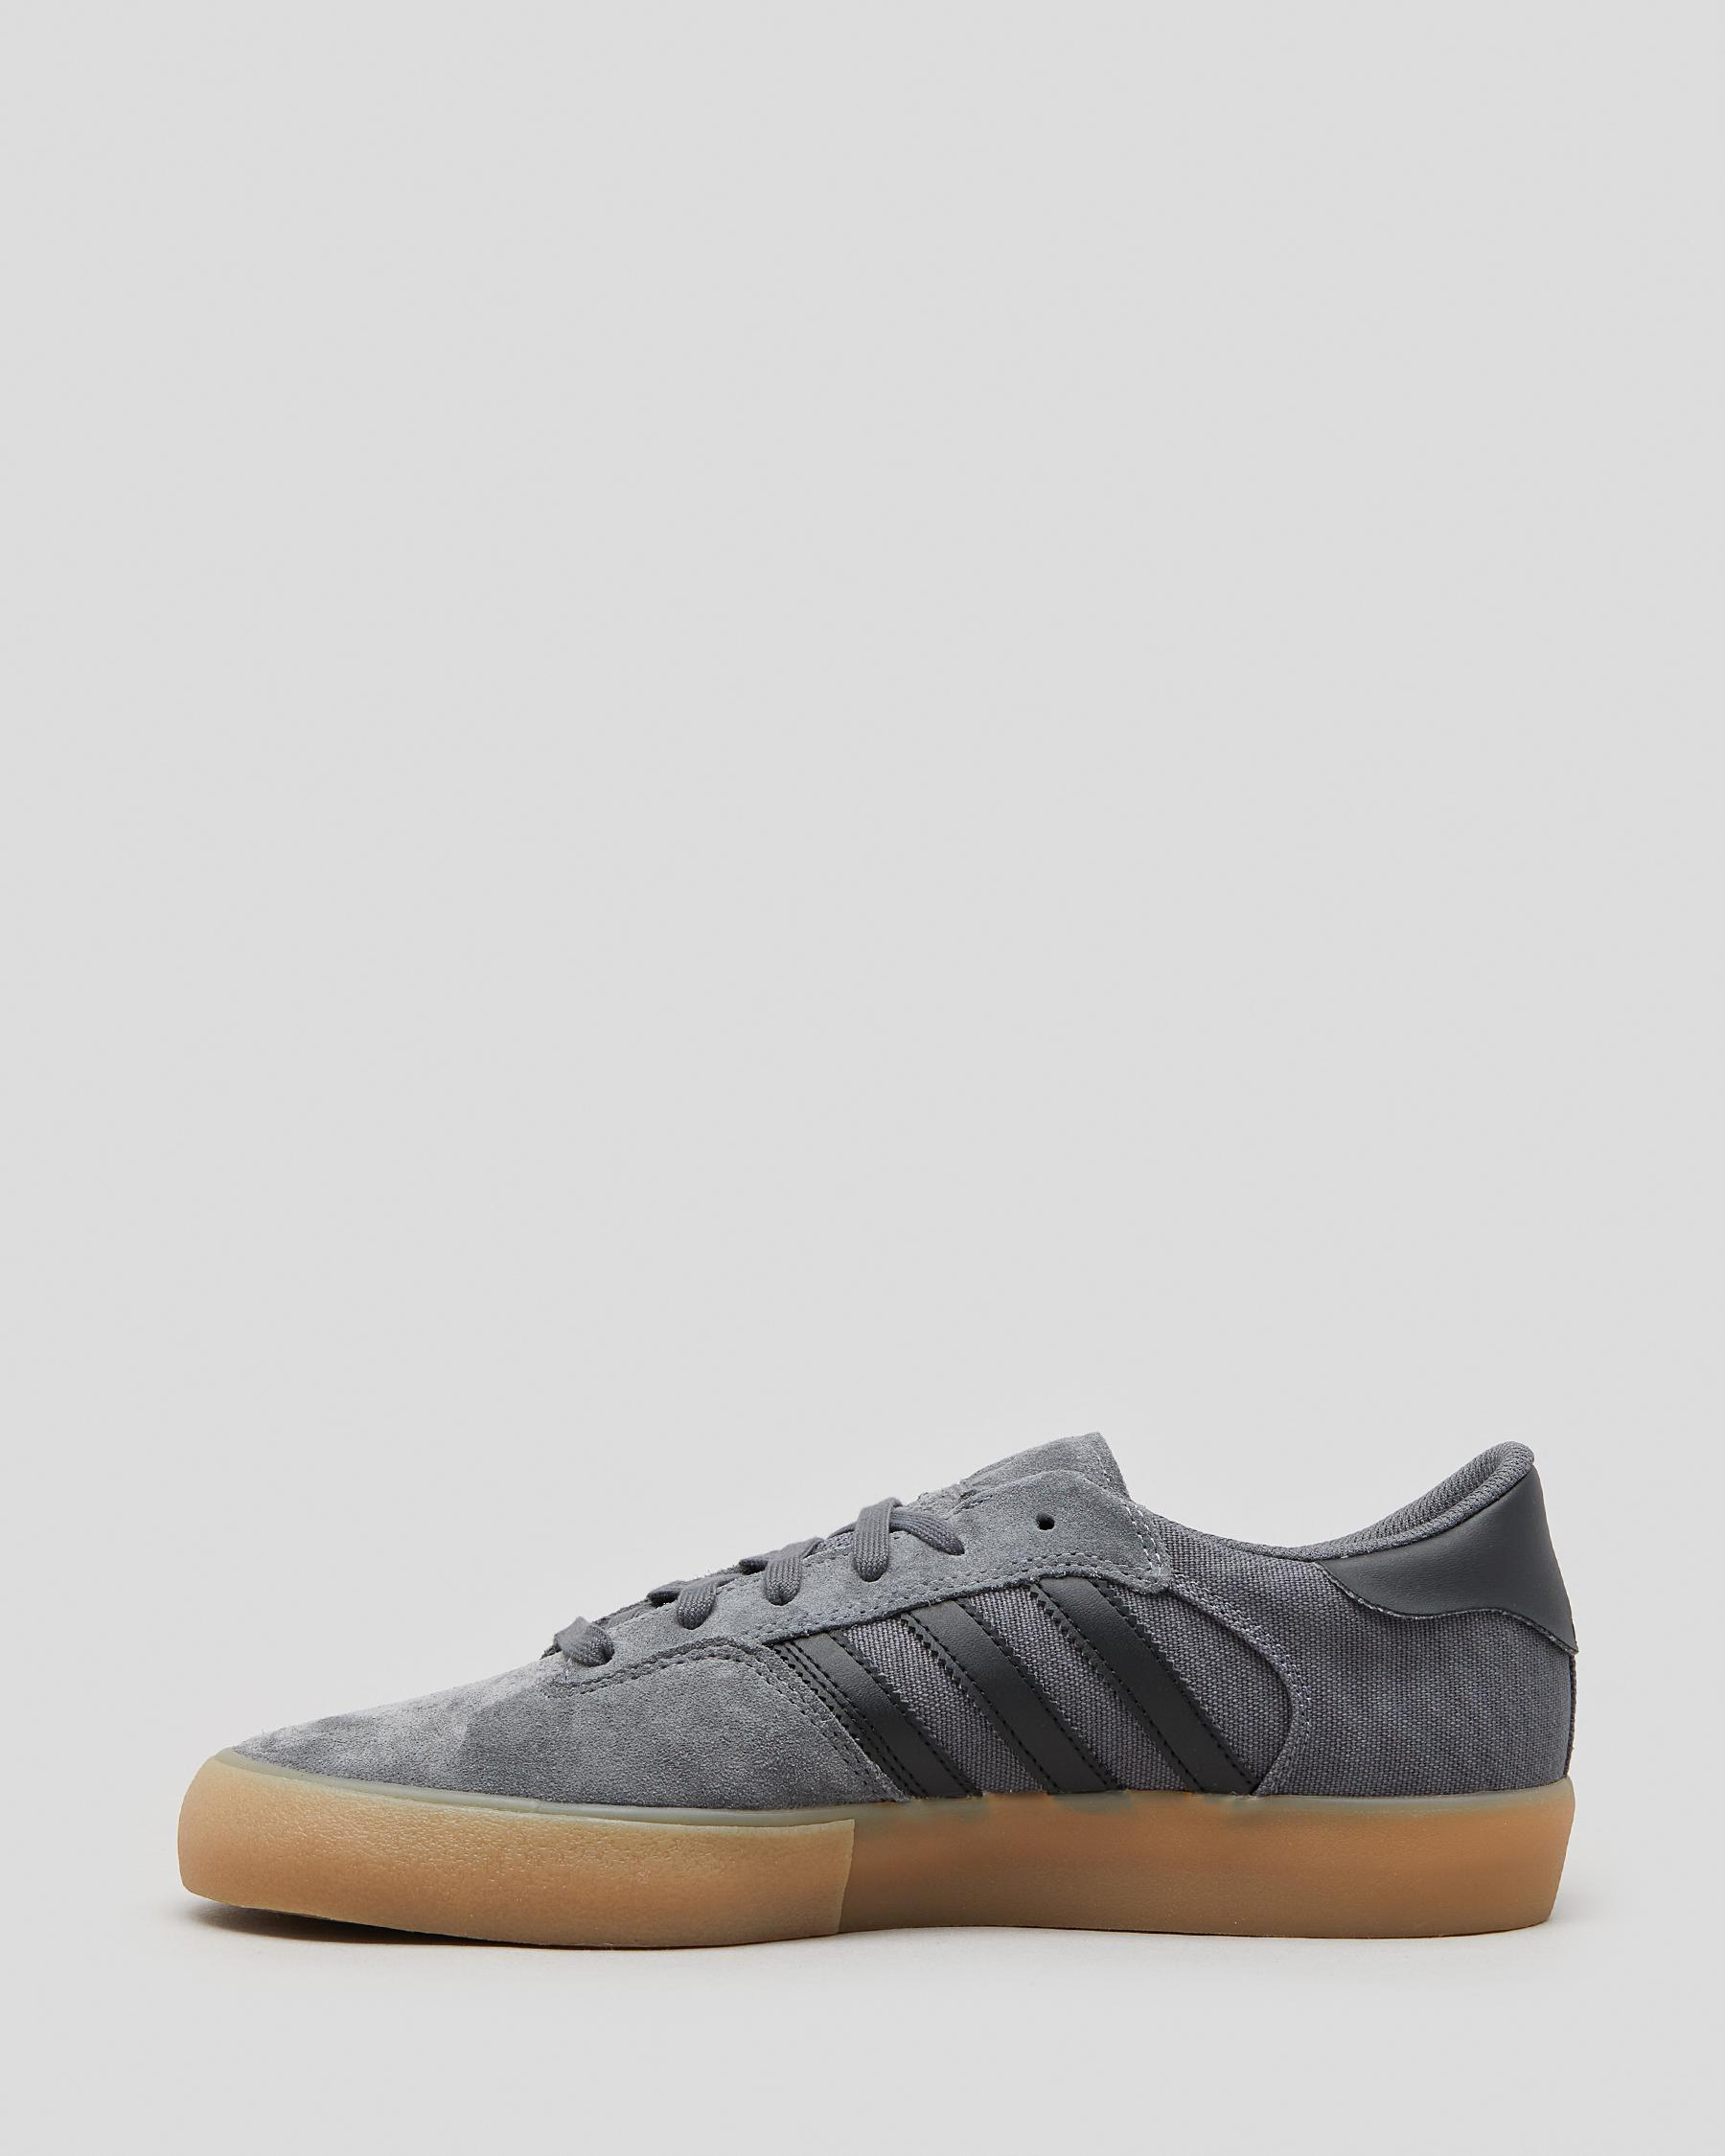 Adidas Matchbreak Super Shoes In Grey Five/core Black/gum4 - Fast ...